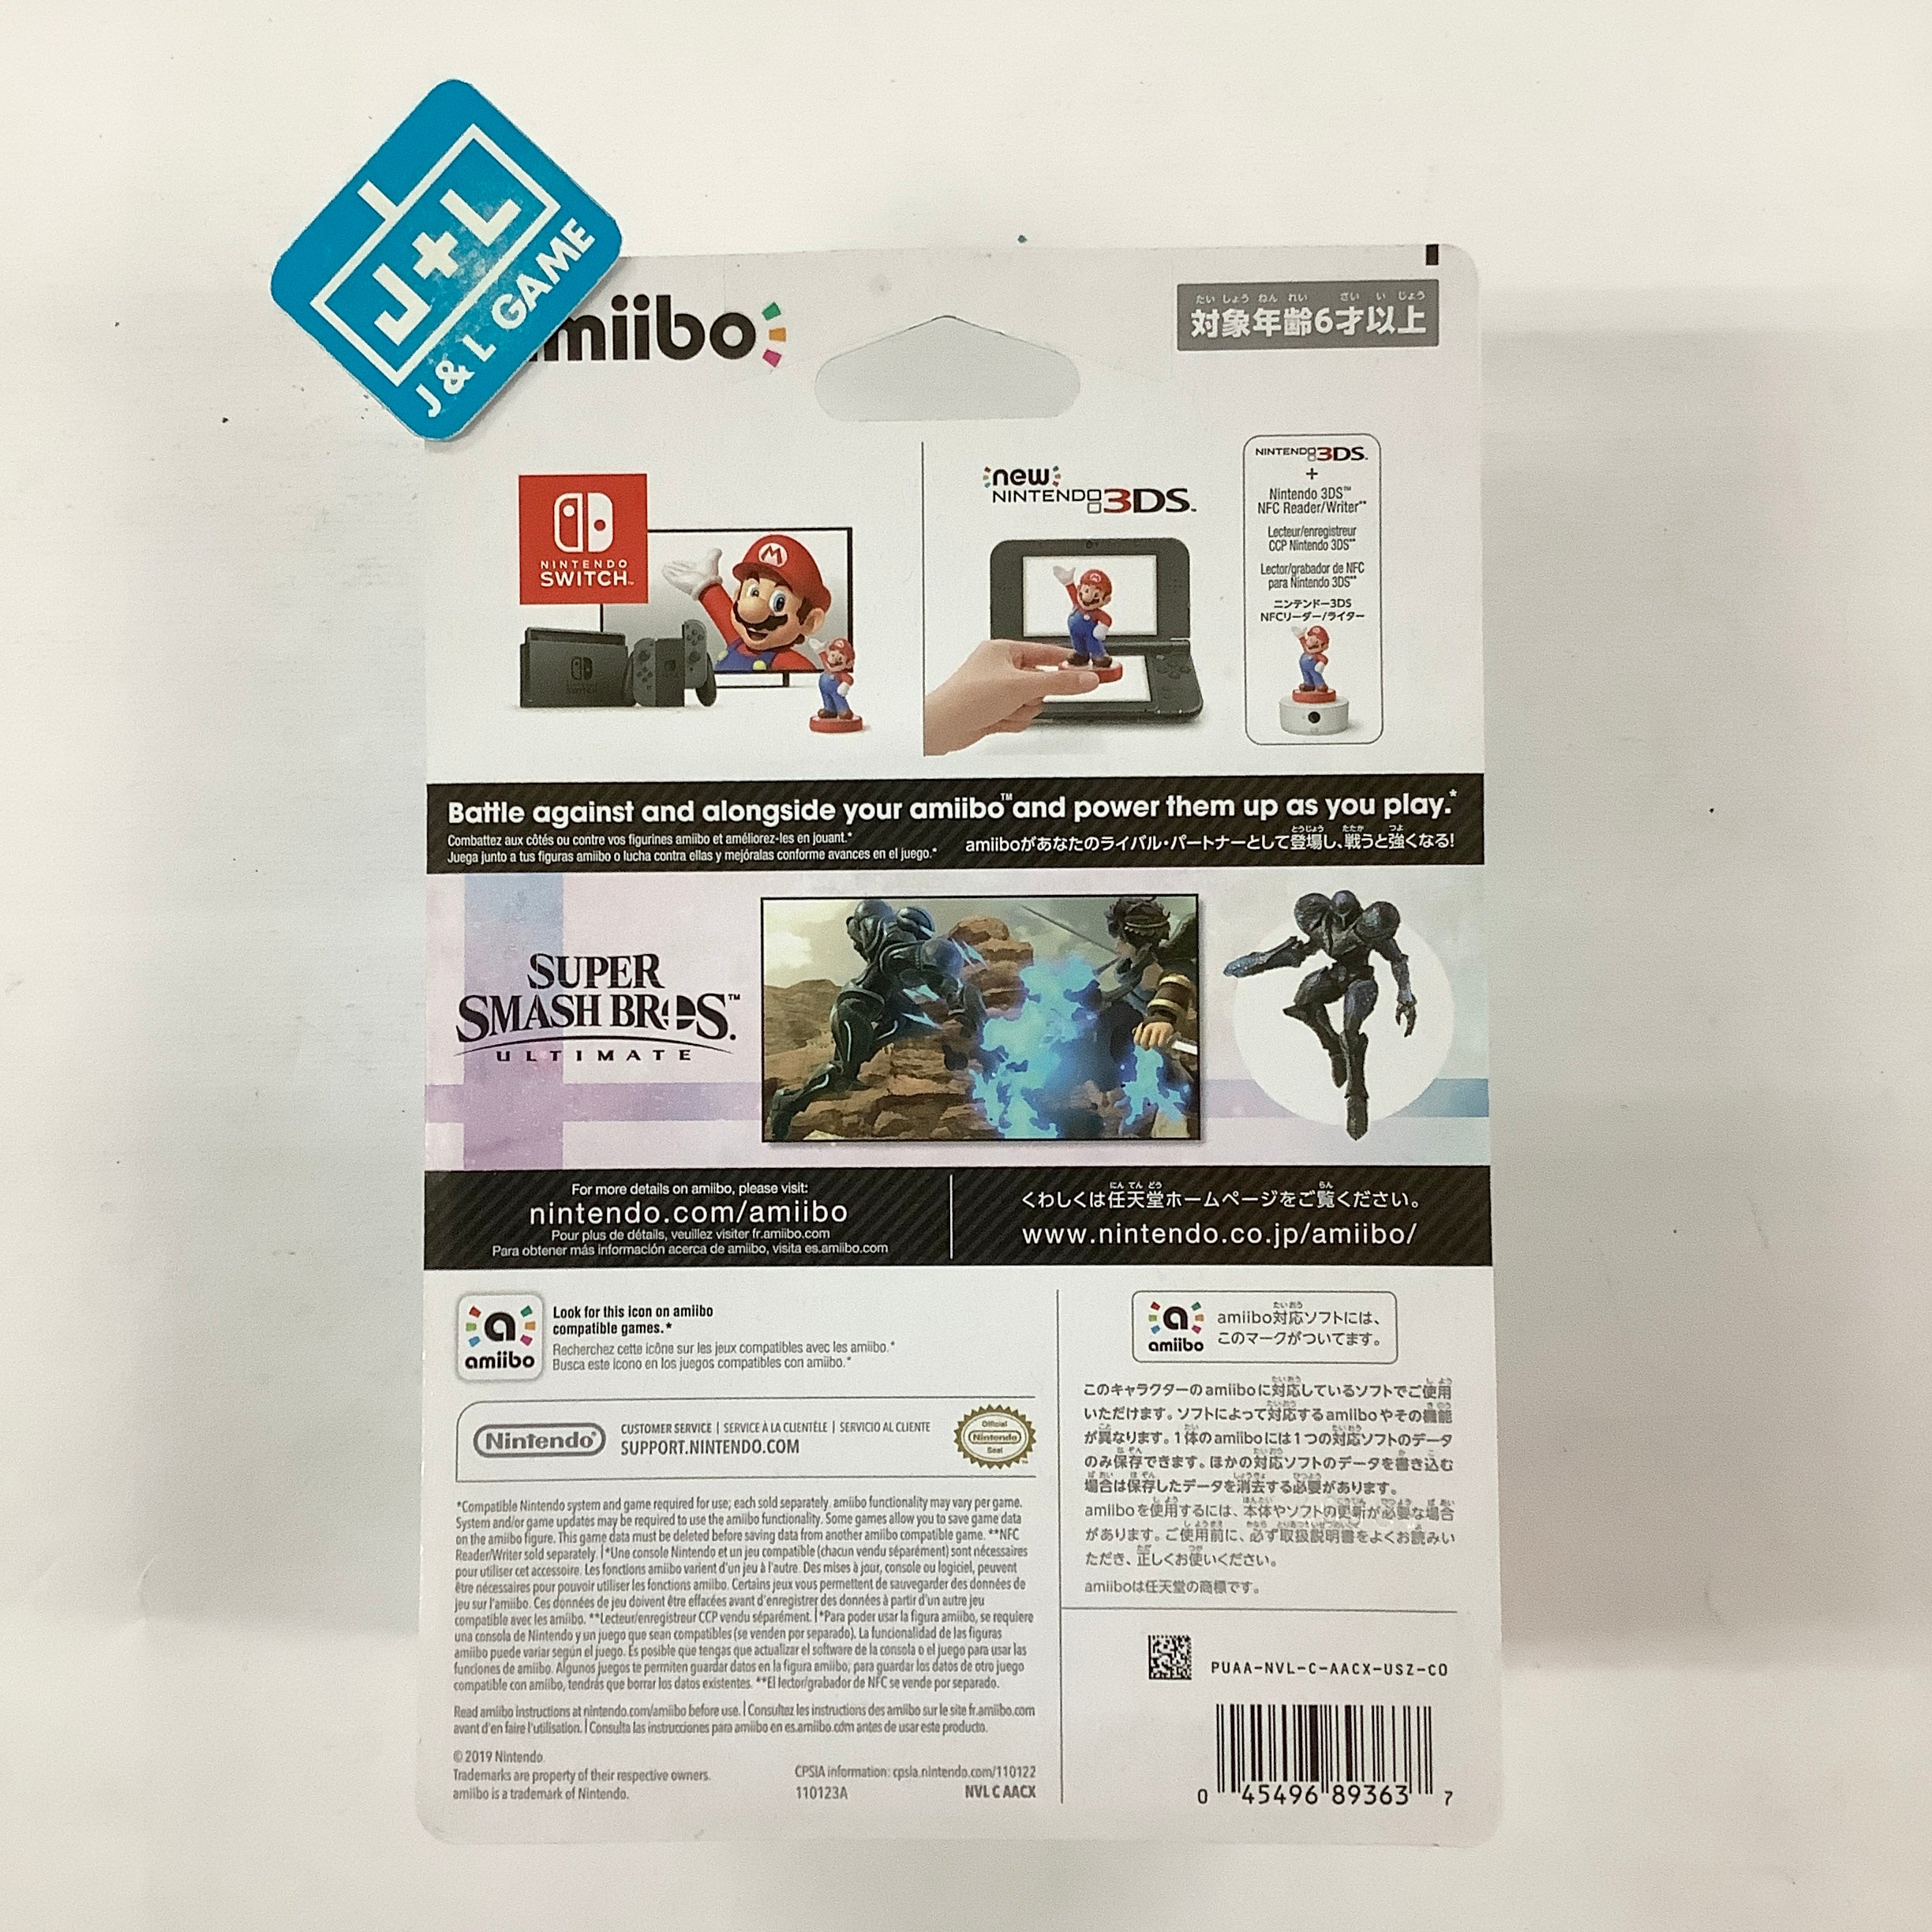 Dark Samus (Super Smash Bros. series) - Nintendo Switch Amiibo Amiibo Nintendo   